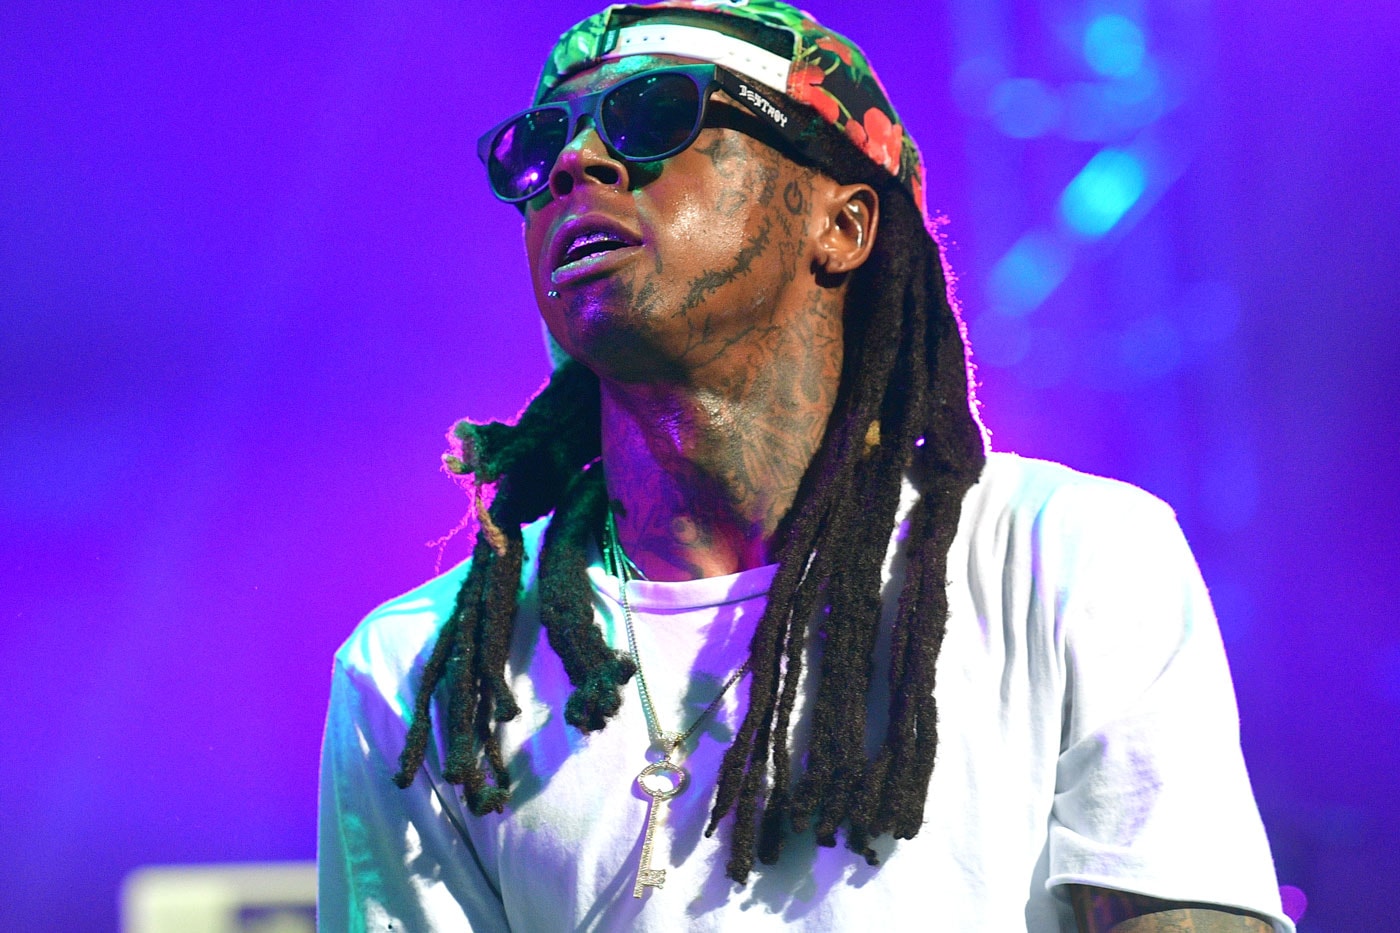 Lil Wayne Shares "Bank Account" & "Blackin Out" D6 Dedication 6 Jay-Z 4:44 The Story of OJ 21 Savage